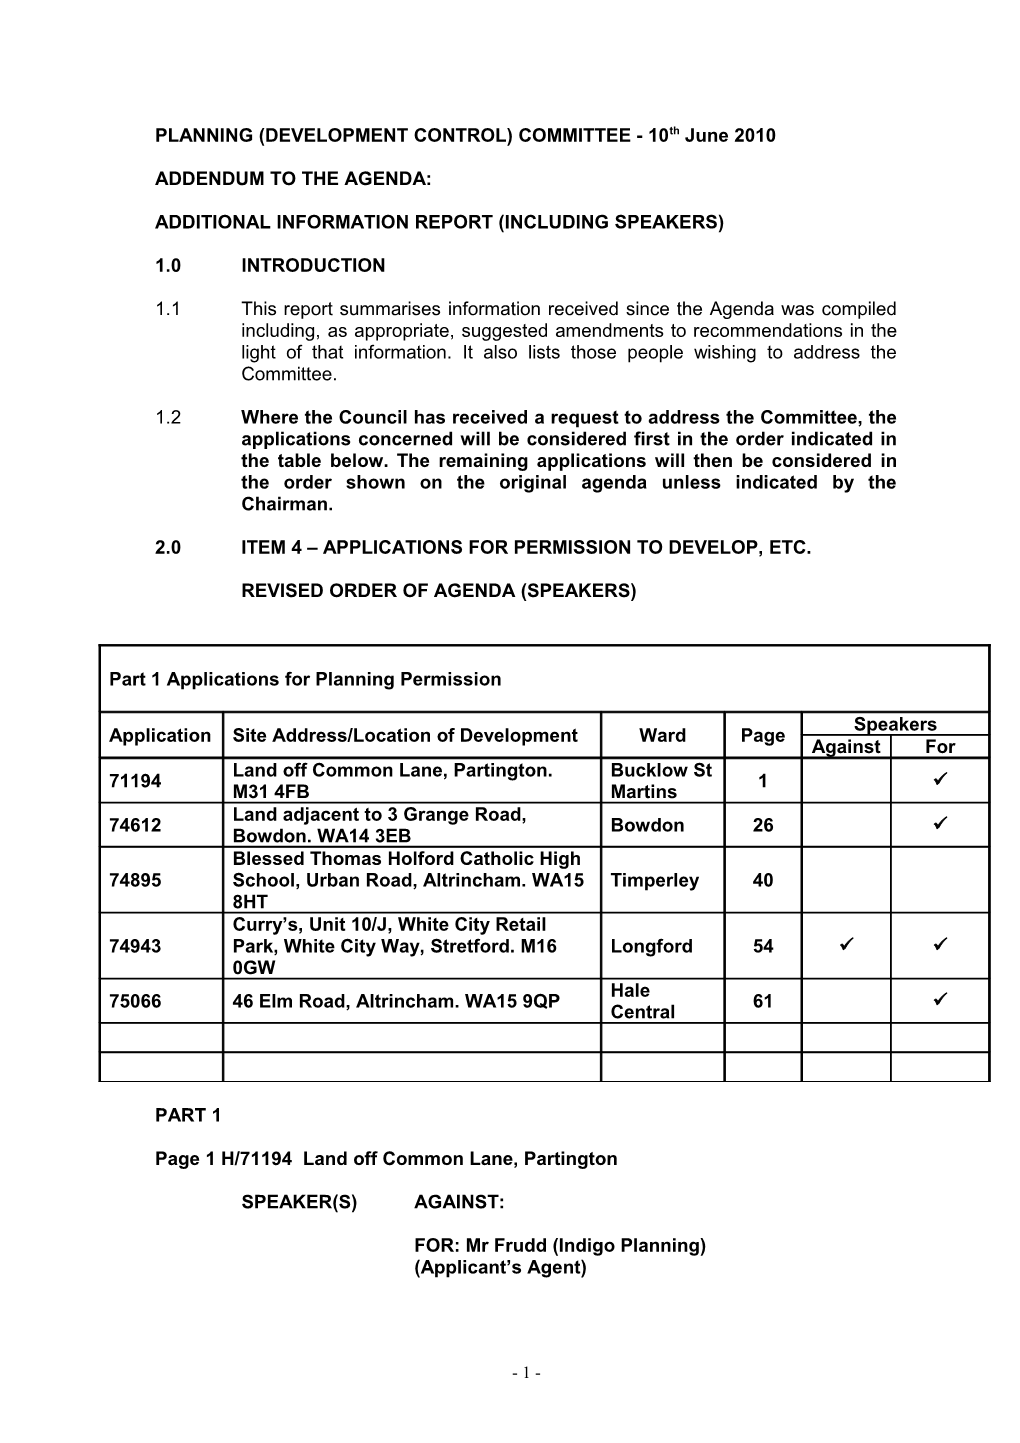 PDC Agenda Item 7 - Additional Information Report - 10.06.10